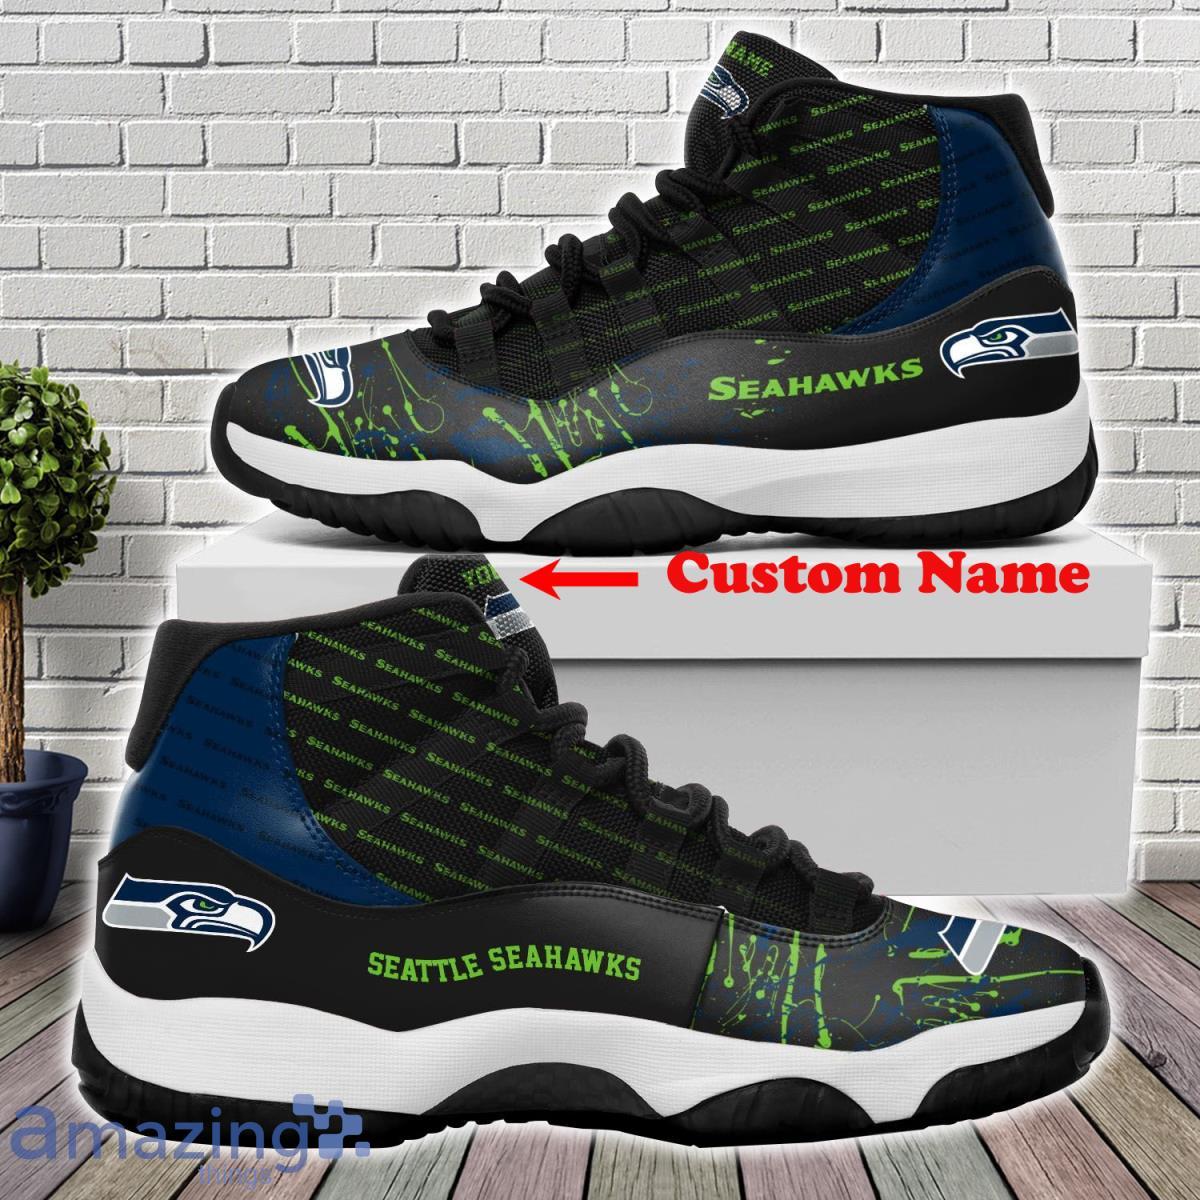 Seattle Seahawks Football Team Air Jordan 11 Custom Name Sneakers For Fans Product Photo 1